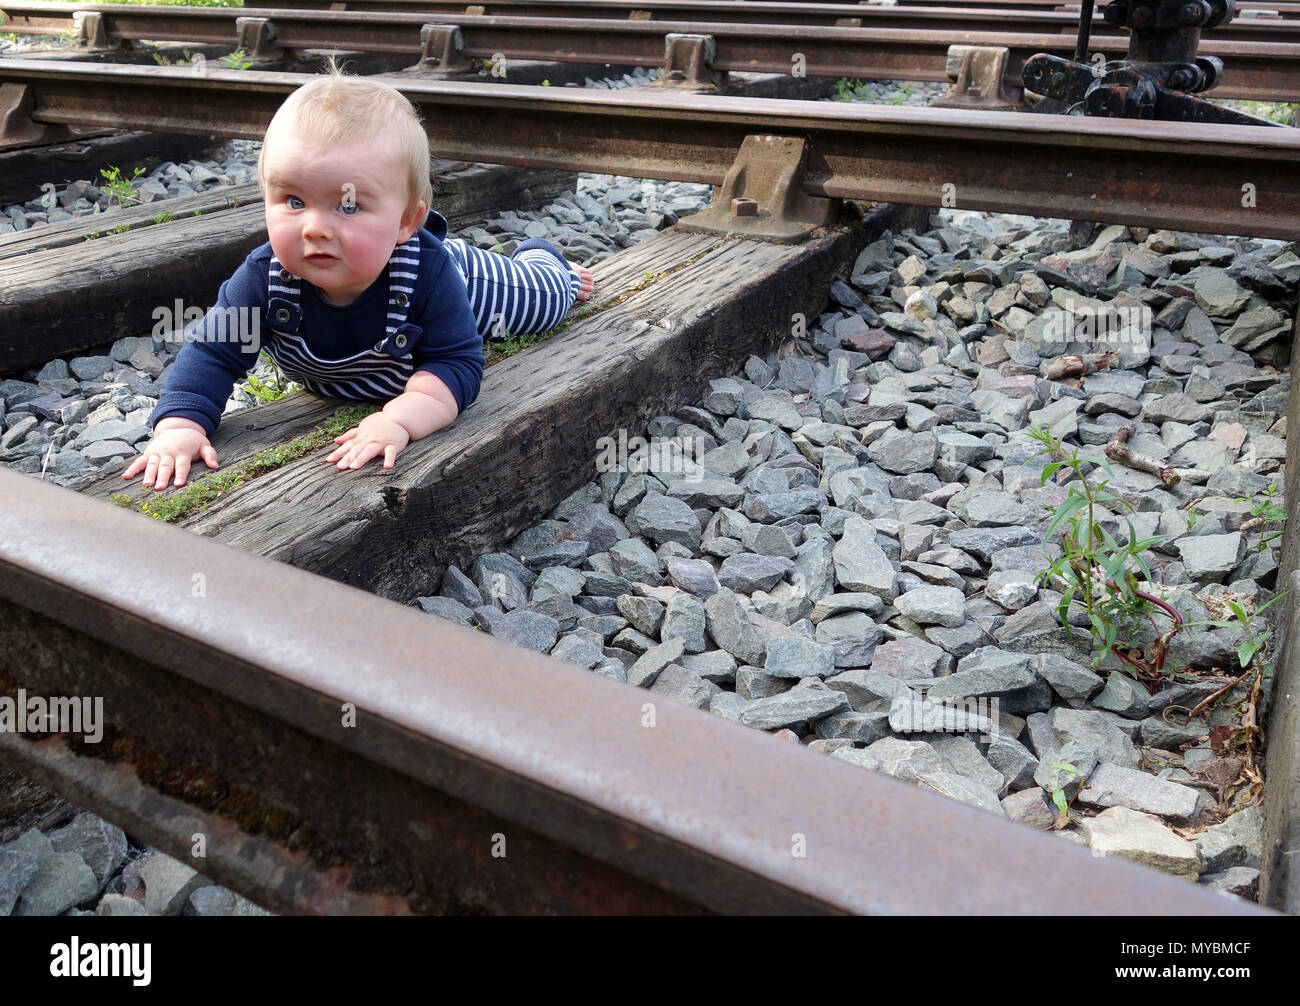 Child baby on disused railway line track Stock Photo